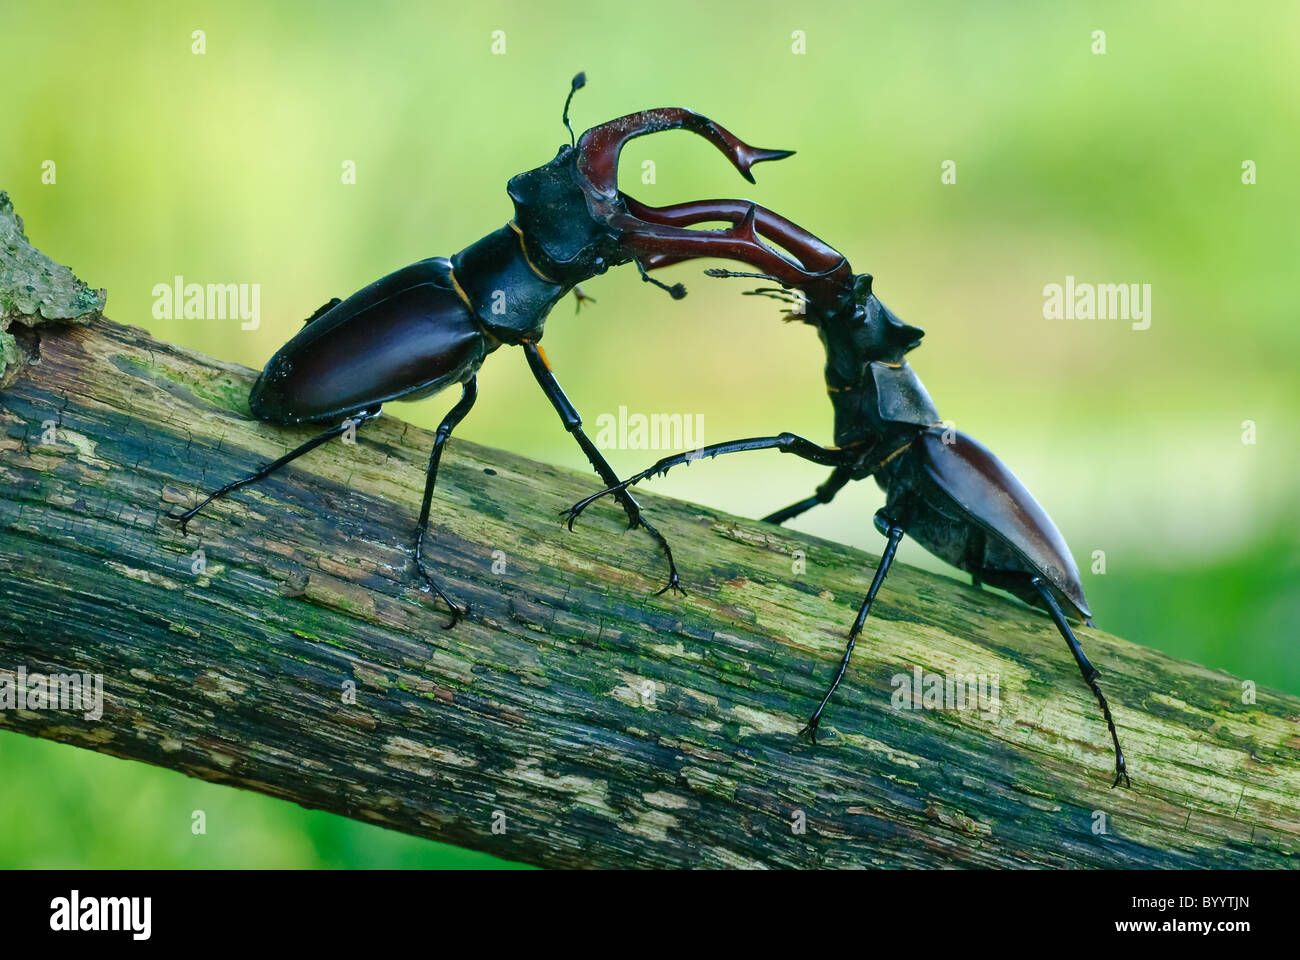 Fighting stag beetles [Lucanus cervus] a courtship ritual Stock Photo